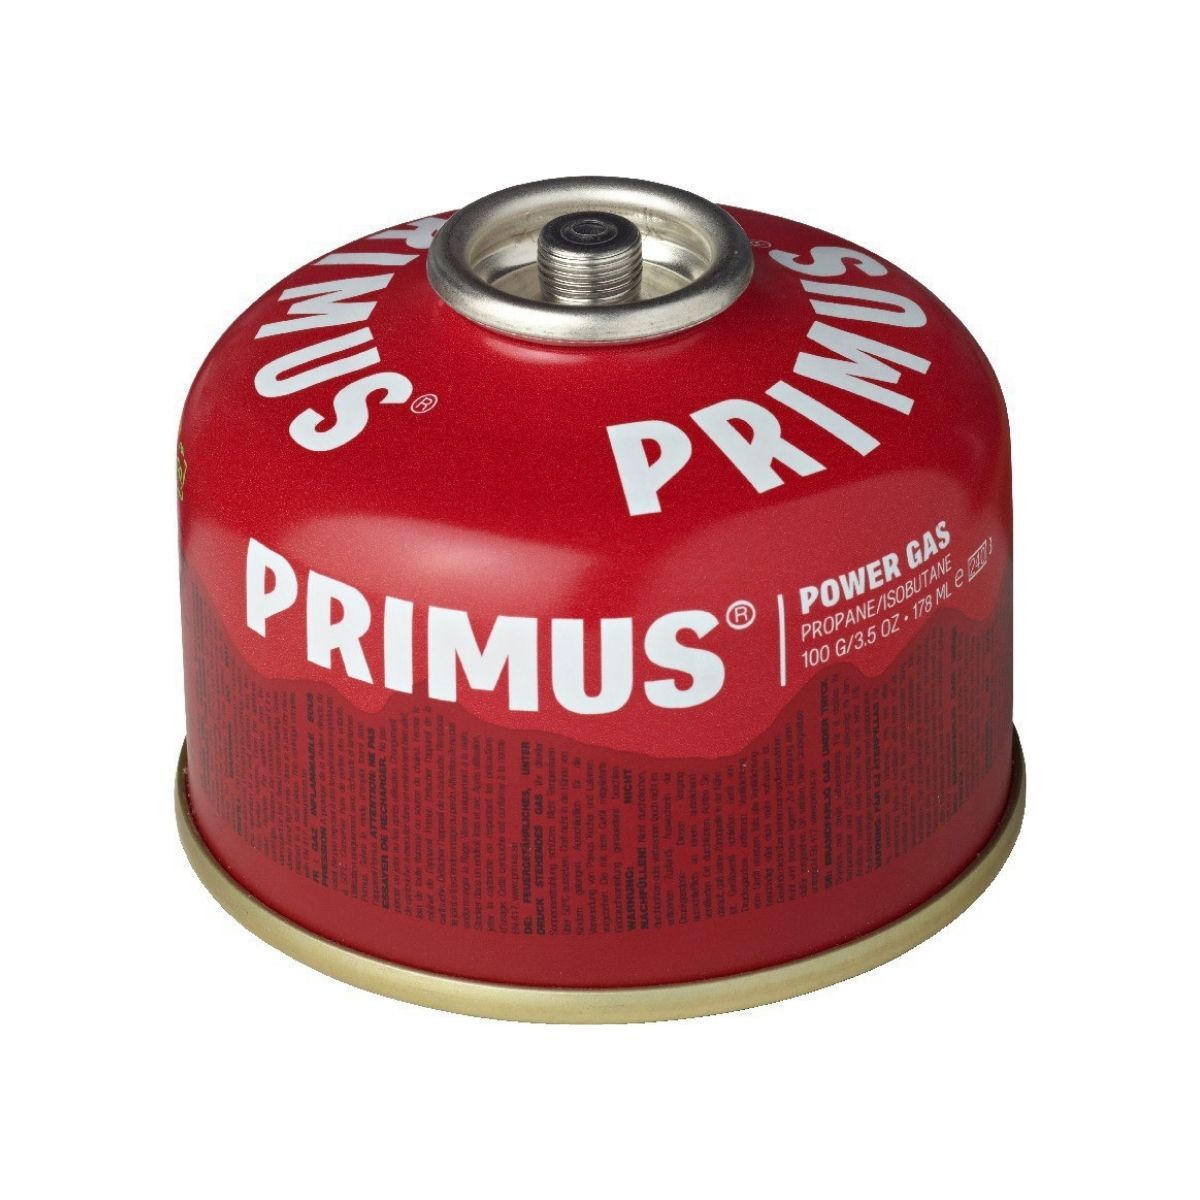 Primus Power Gas 100 g L1 - Gaspatroon